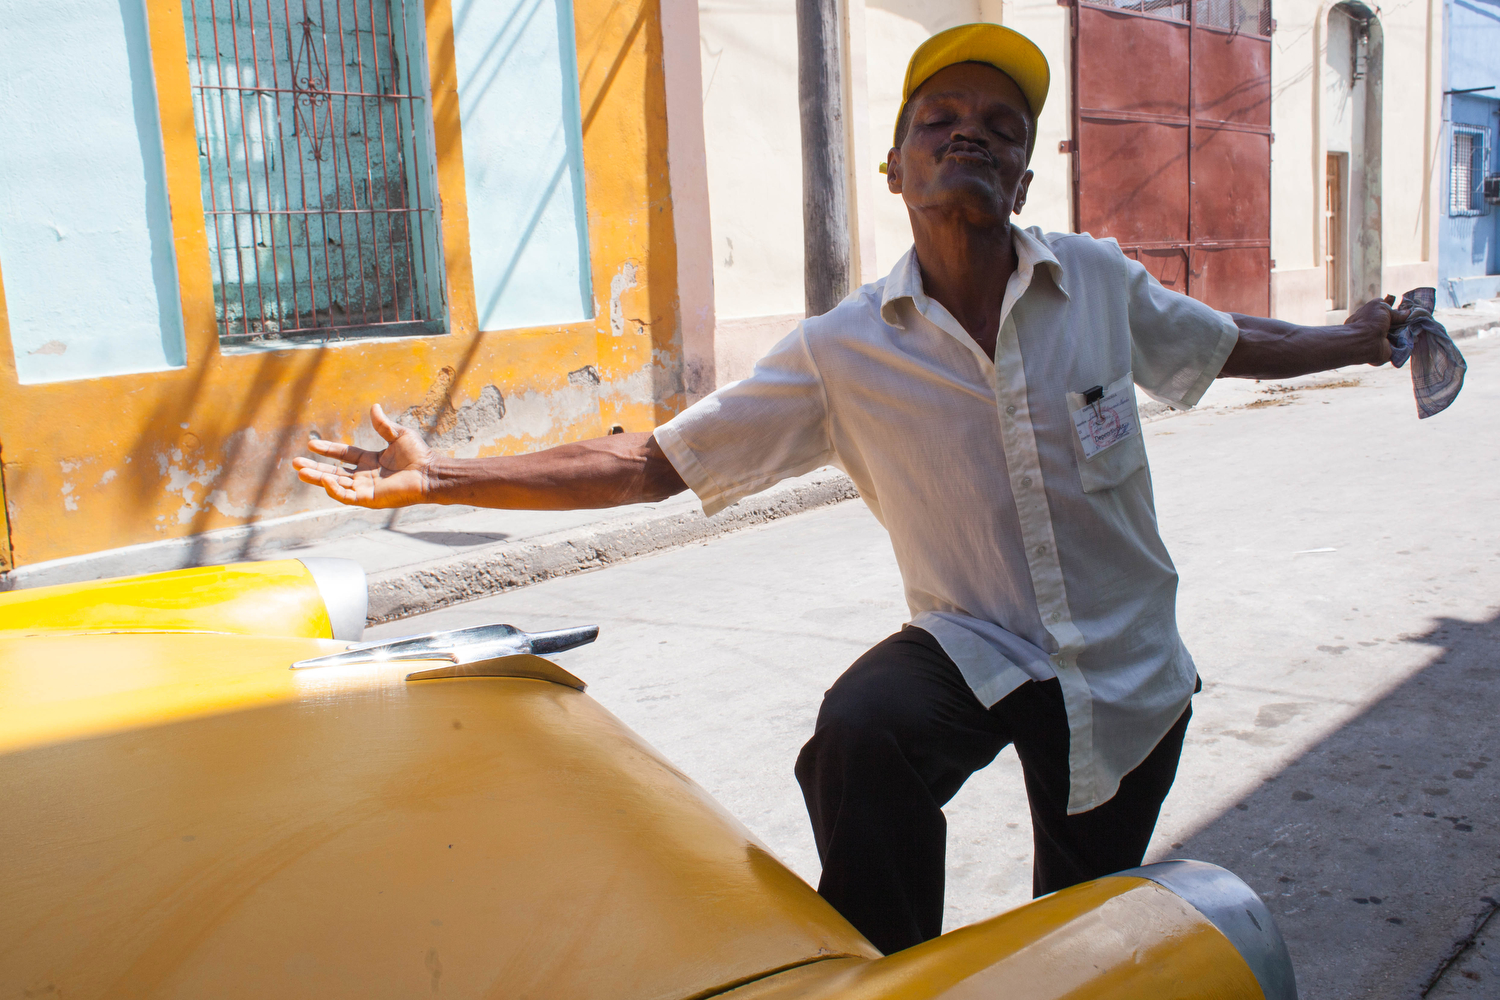  A man sends a kiss, working near the food ration distribution near the port of Santiago de Cuba, Cuba. 